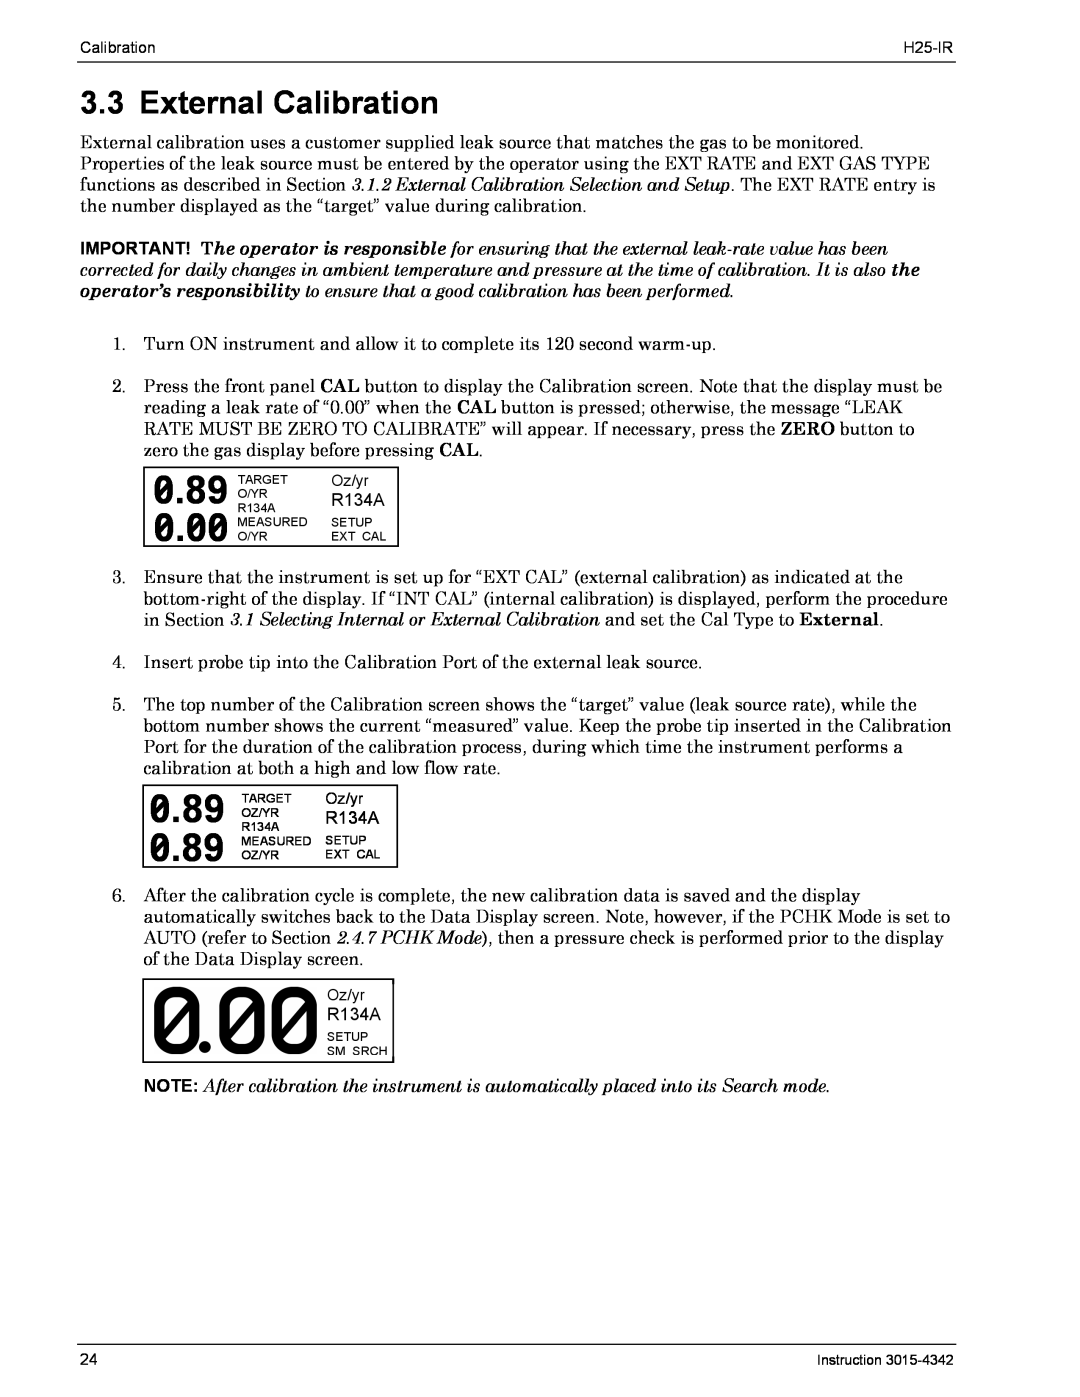 Bacharach H25-IR manual 0.89, External Calibration, Oz/yr 